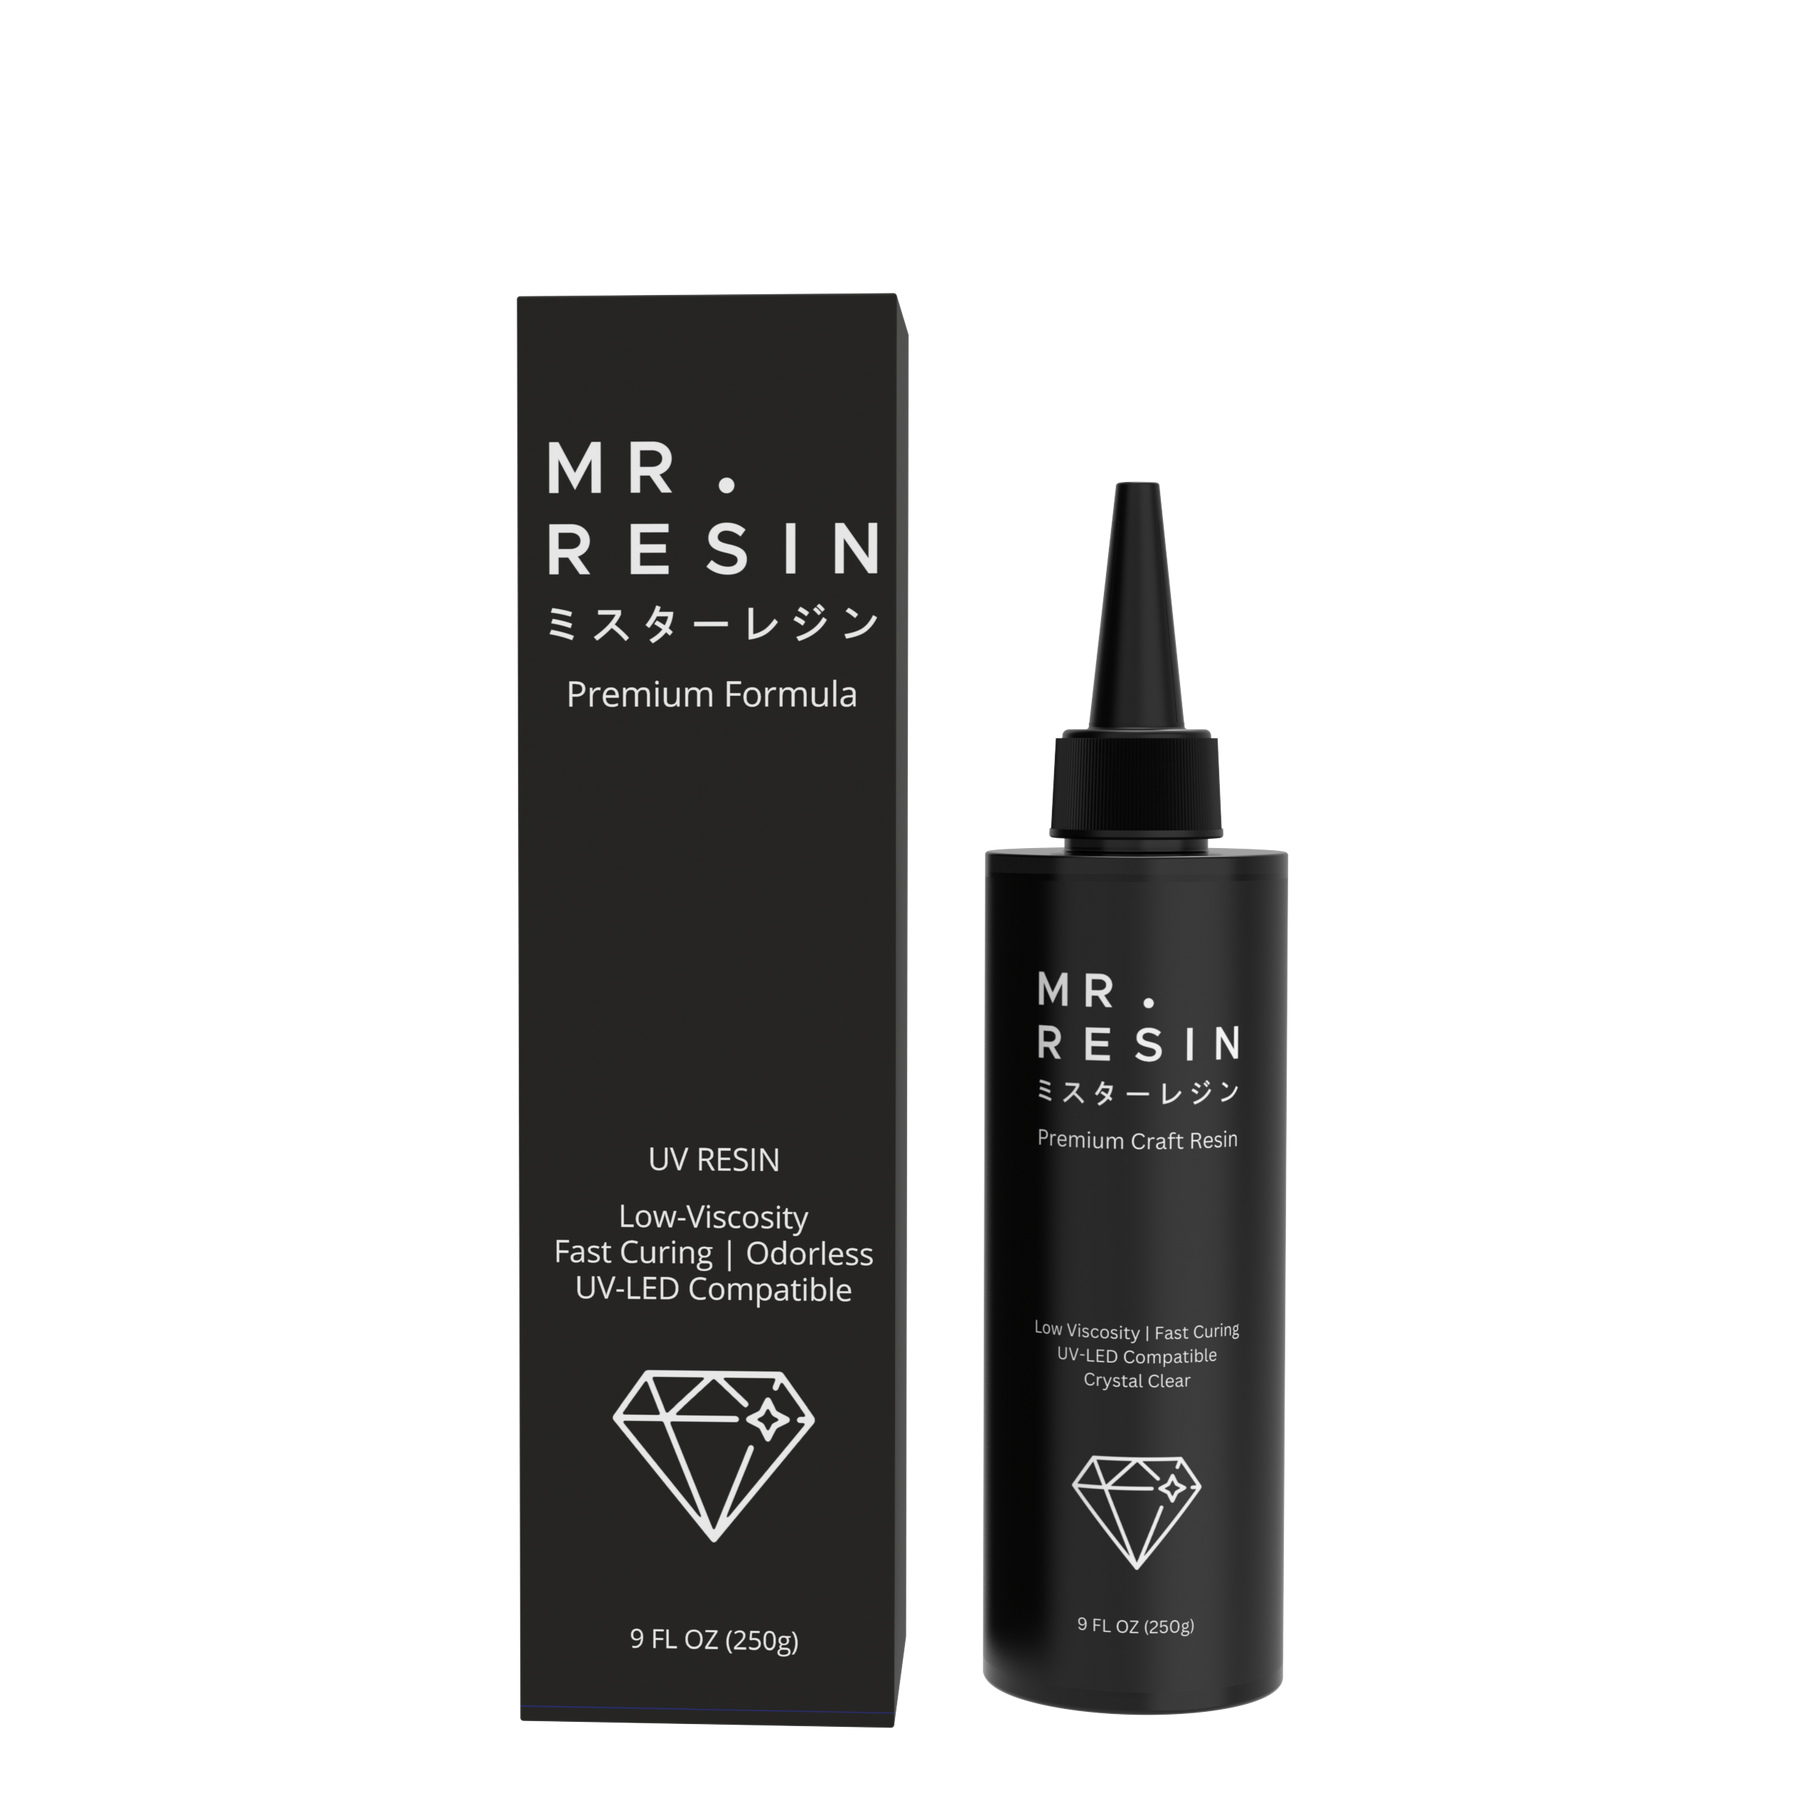 MR. RESIN Original Line - (250g Kit)